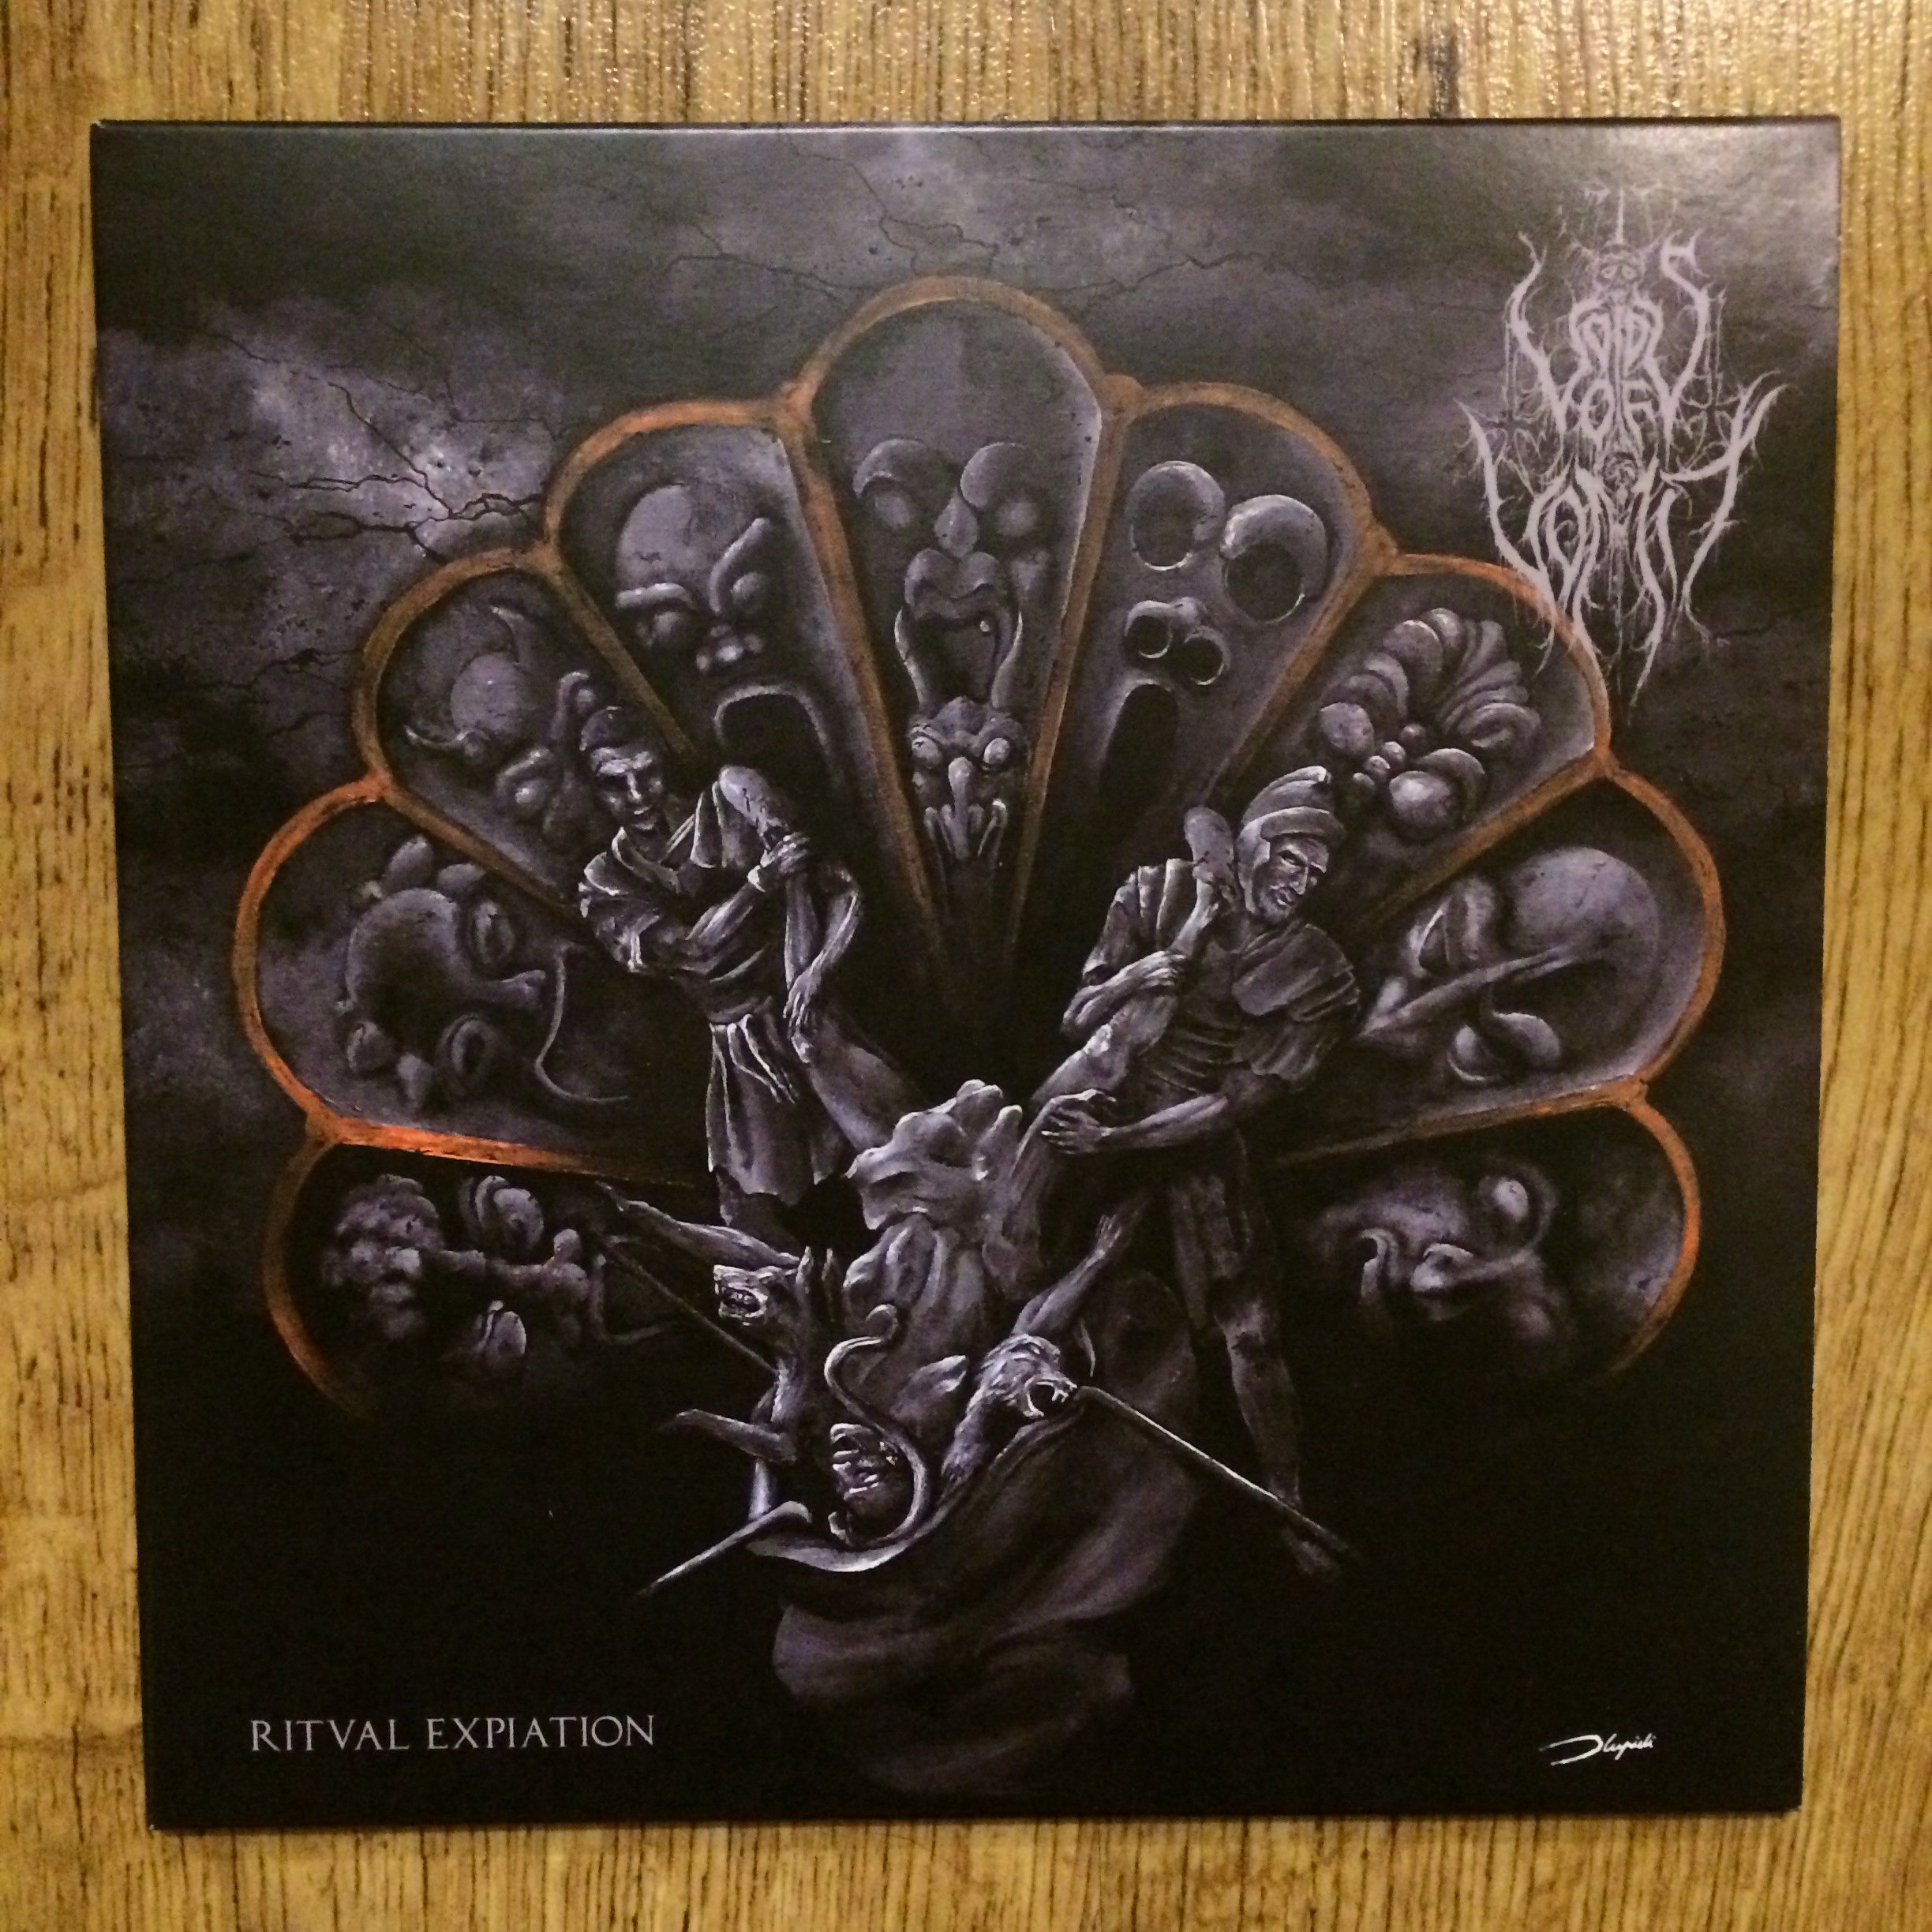 Photo of the Voids of Vomit - "Ritval Expiation" EP (Black vinyl)